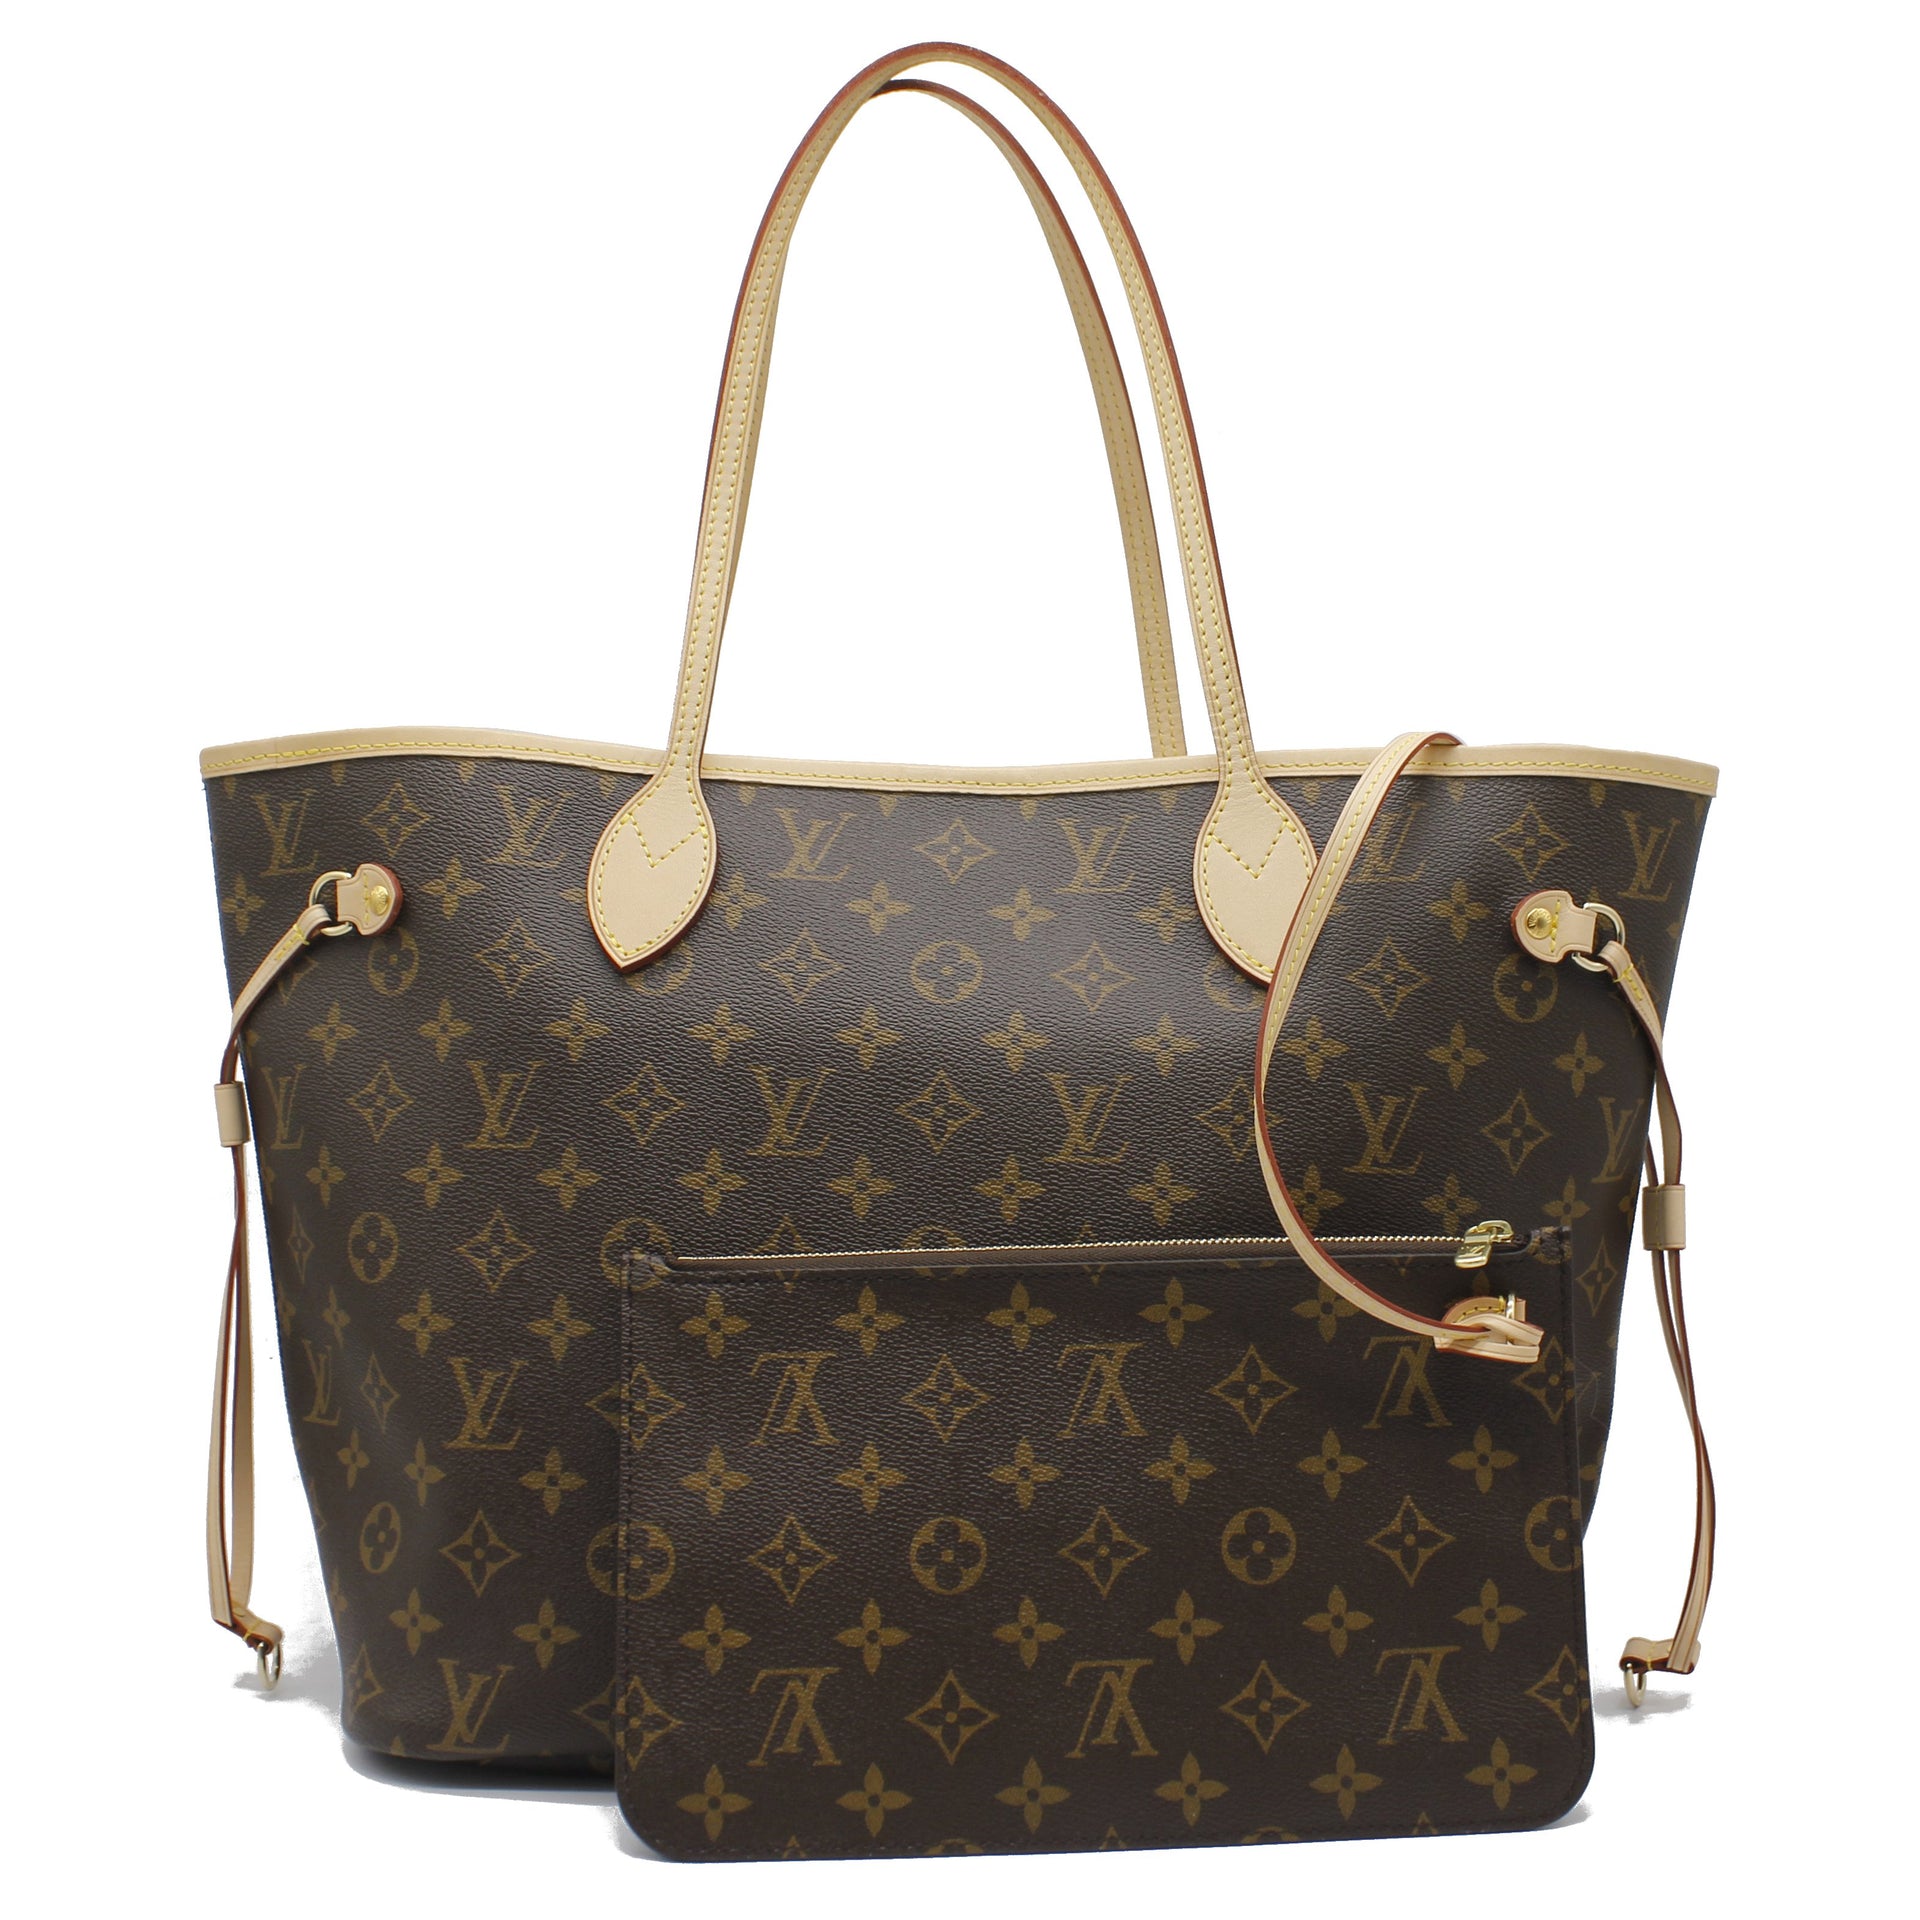 Louis Vuitton Neverfull MM Monogram Shoulder Bag